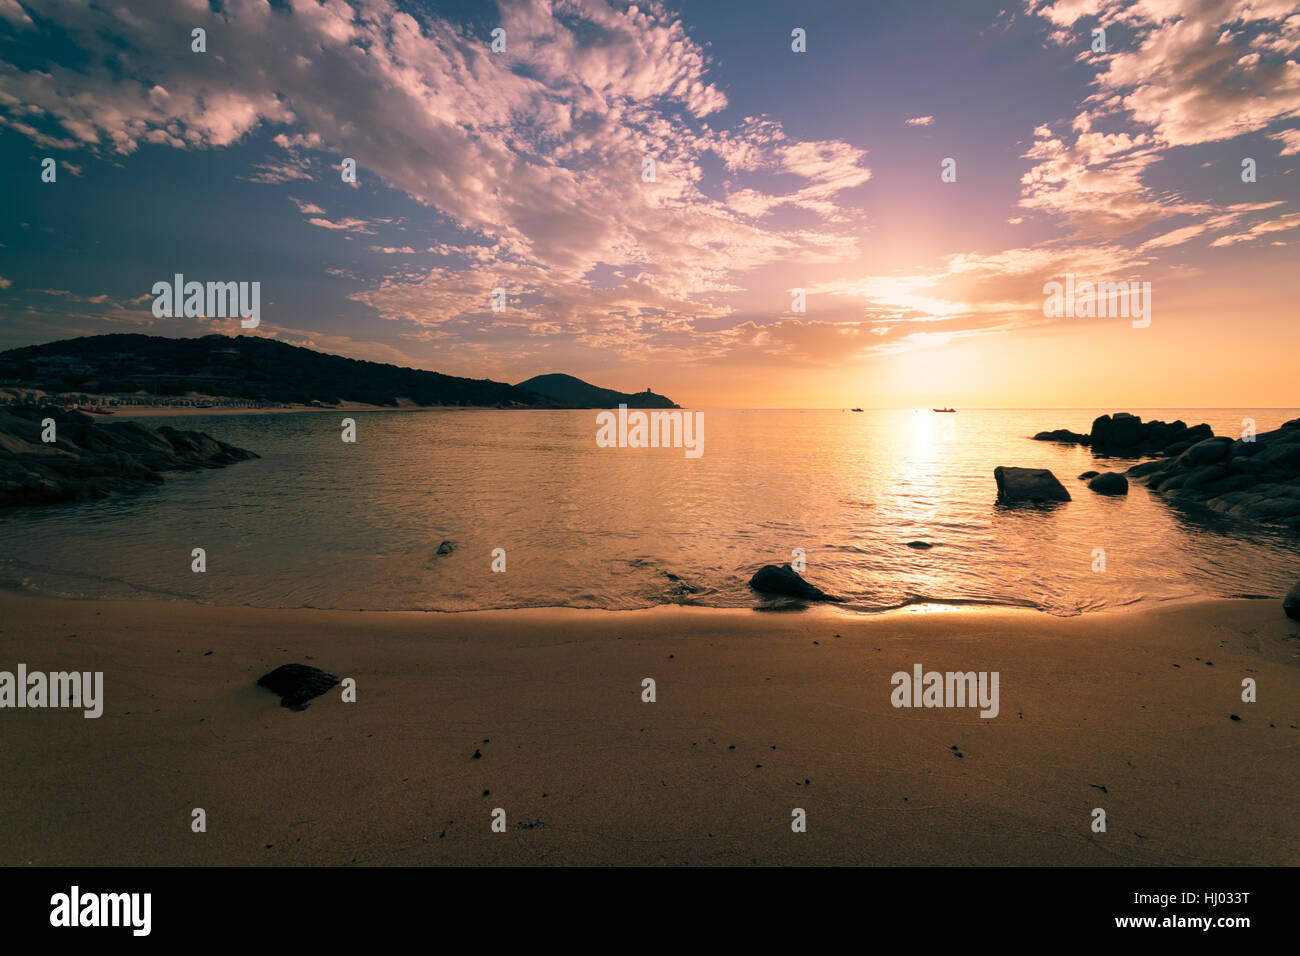 Sunrise on the beach of Chia, Sardinia Island, Italy. Stock Photo